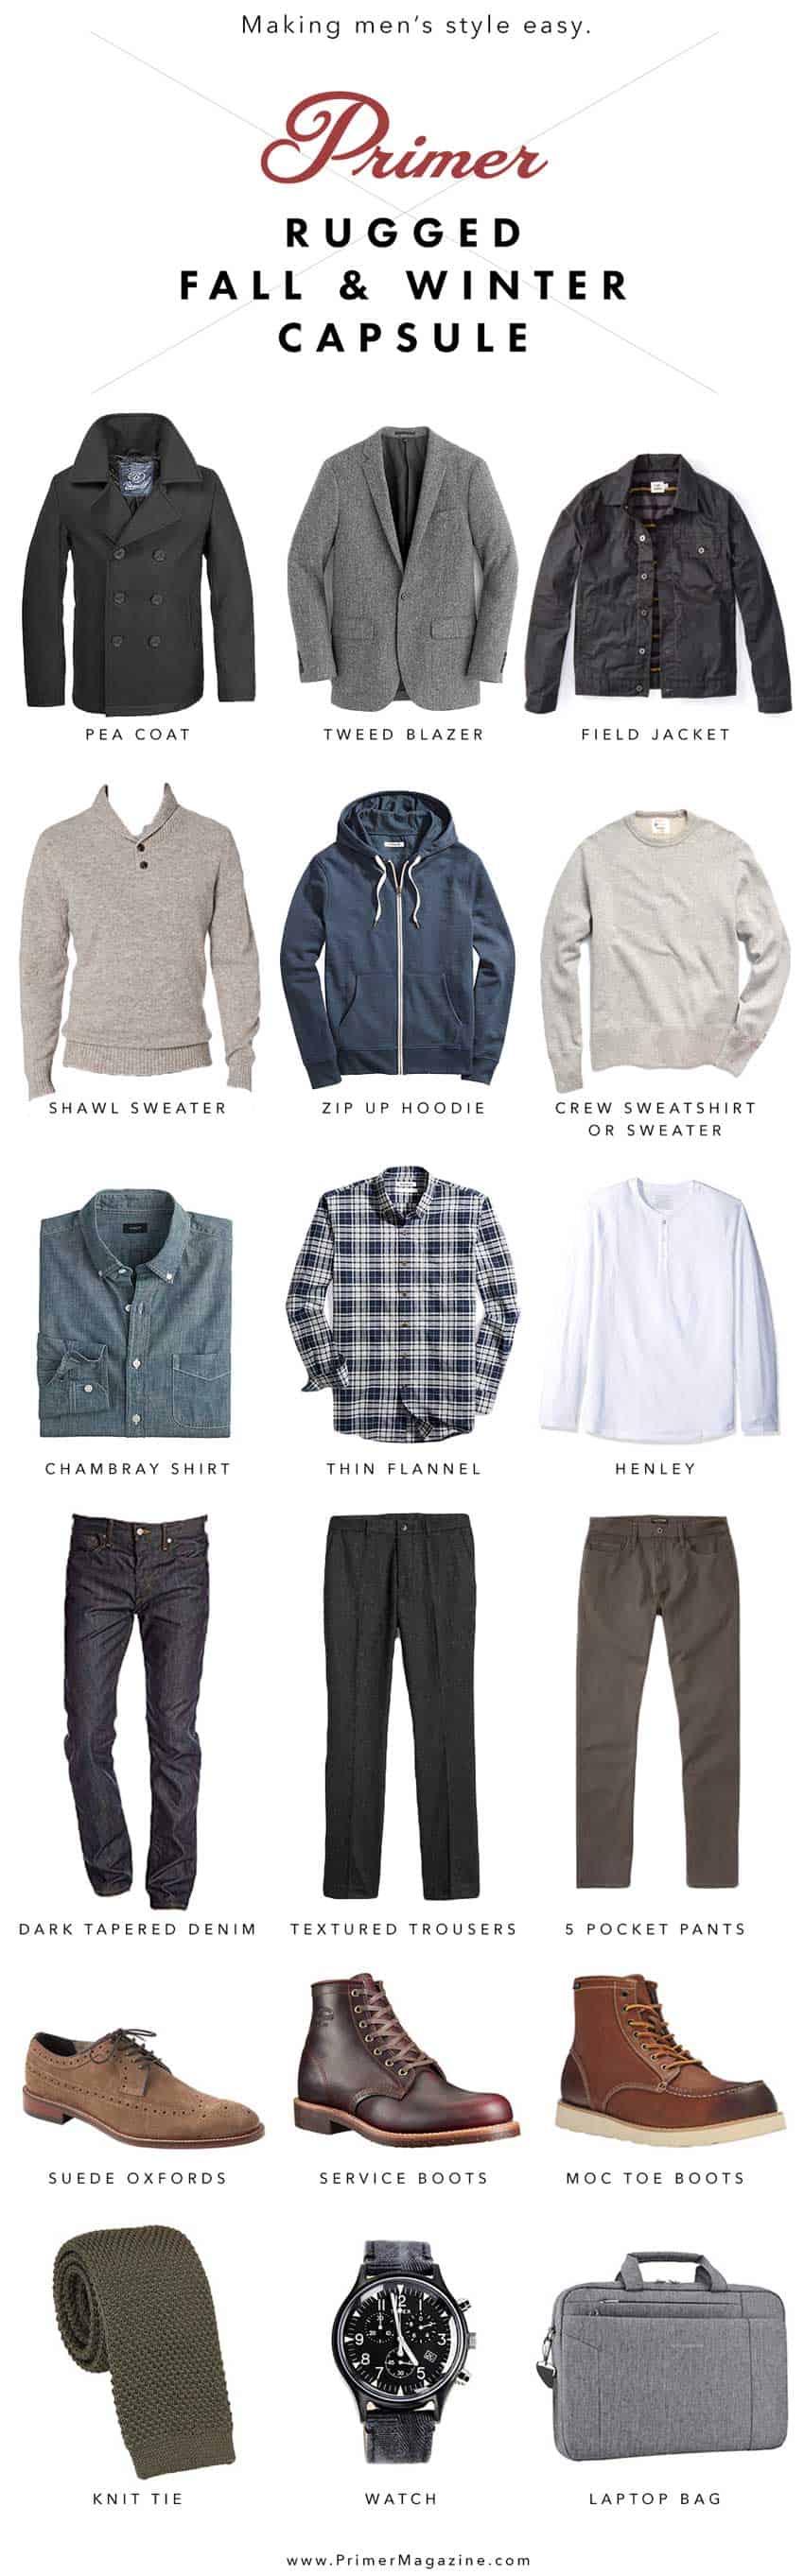 10 Winter Wardrobe Essentials + Outfit Ideas - Classy Yet Trendy